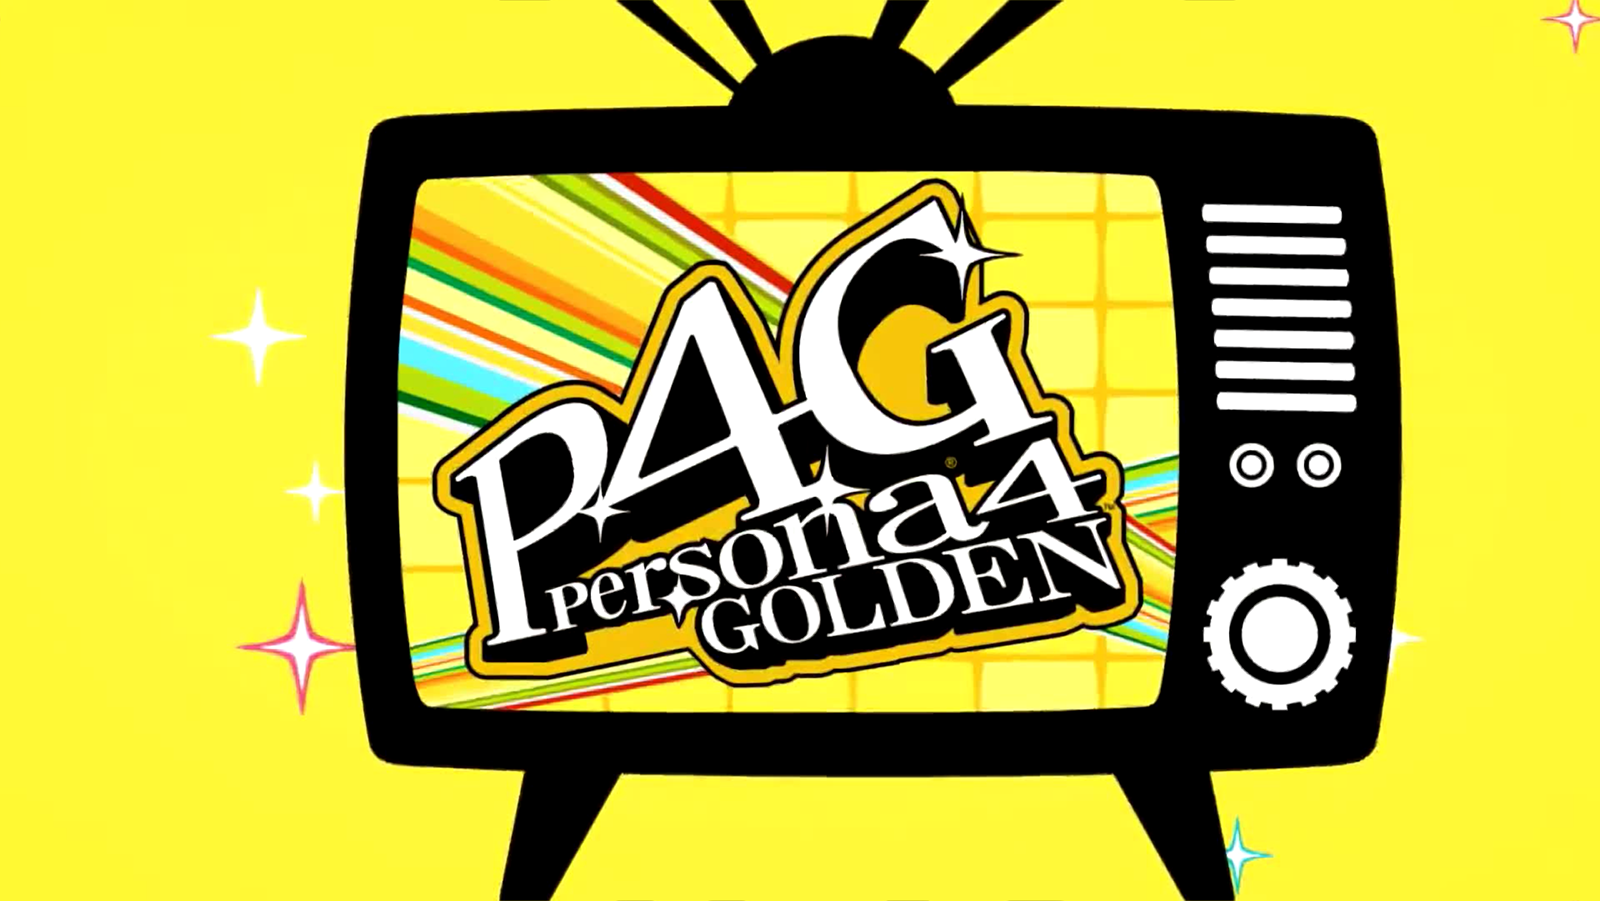 Persona 4 Golden. Persona 4 Golden 2020 PC. Persona 4 Golden logo. Персона 4 Голден обзор. Канал телевизора золотая коллекция